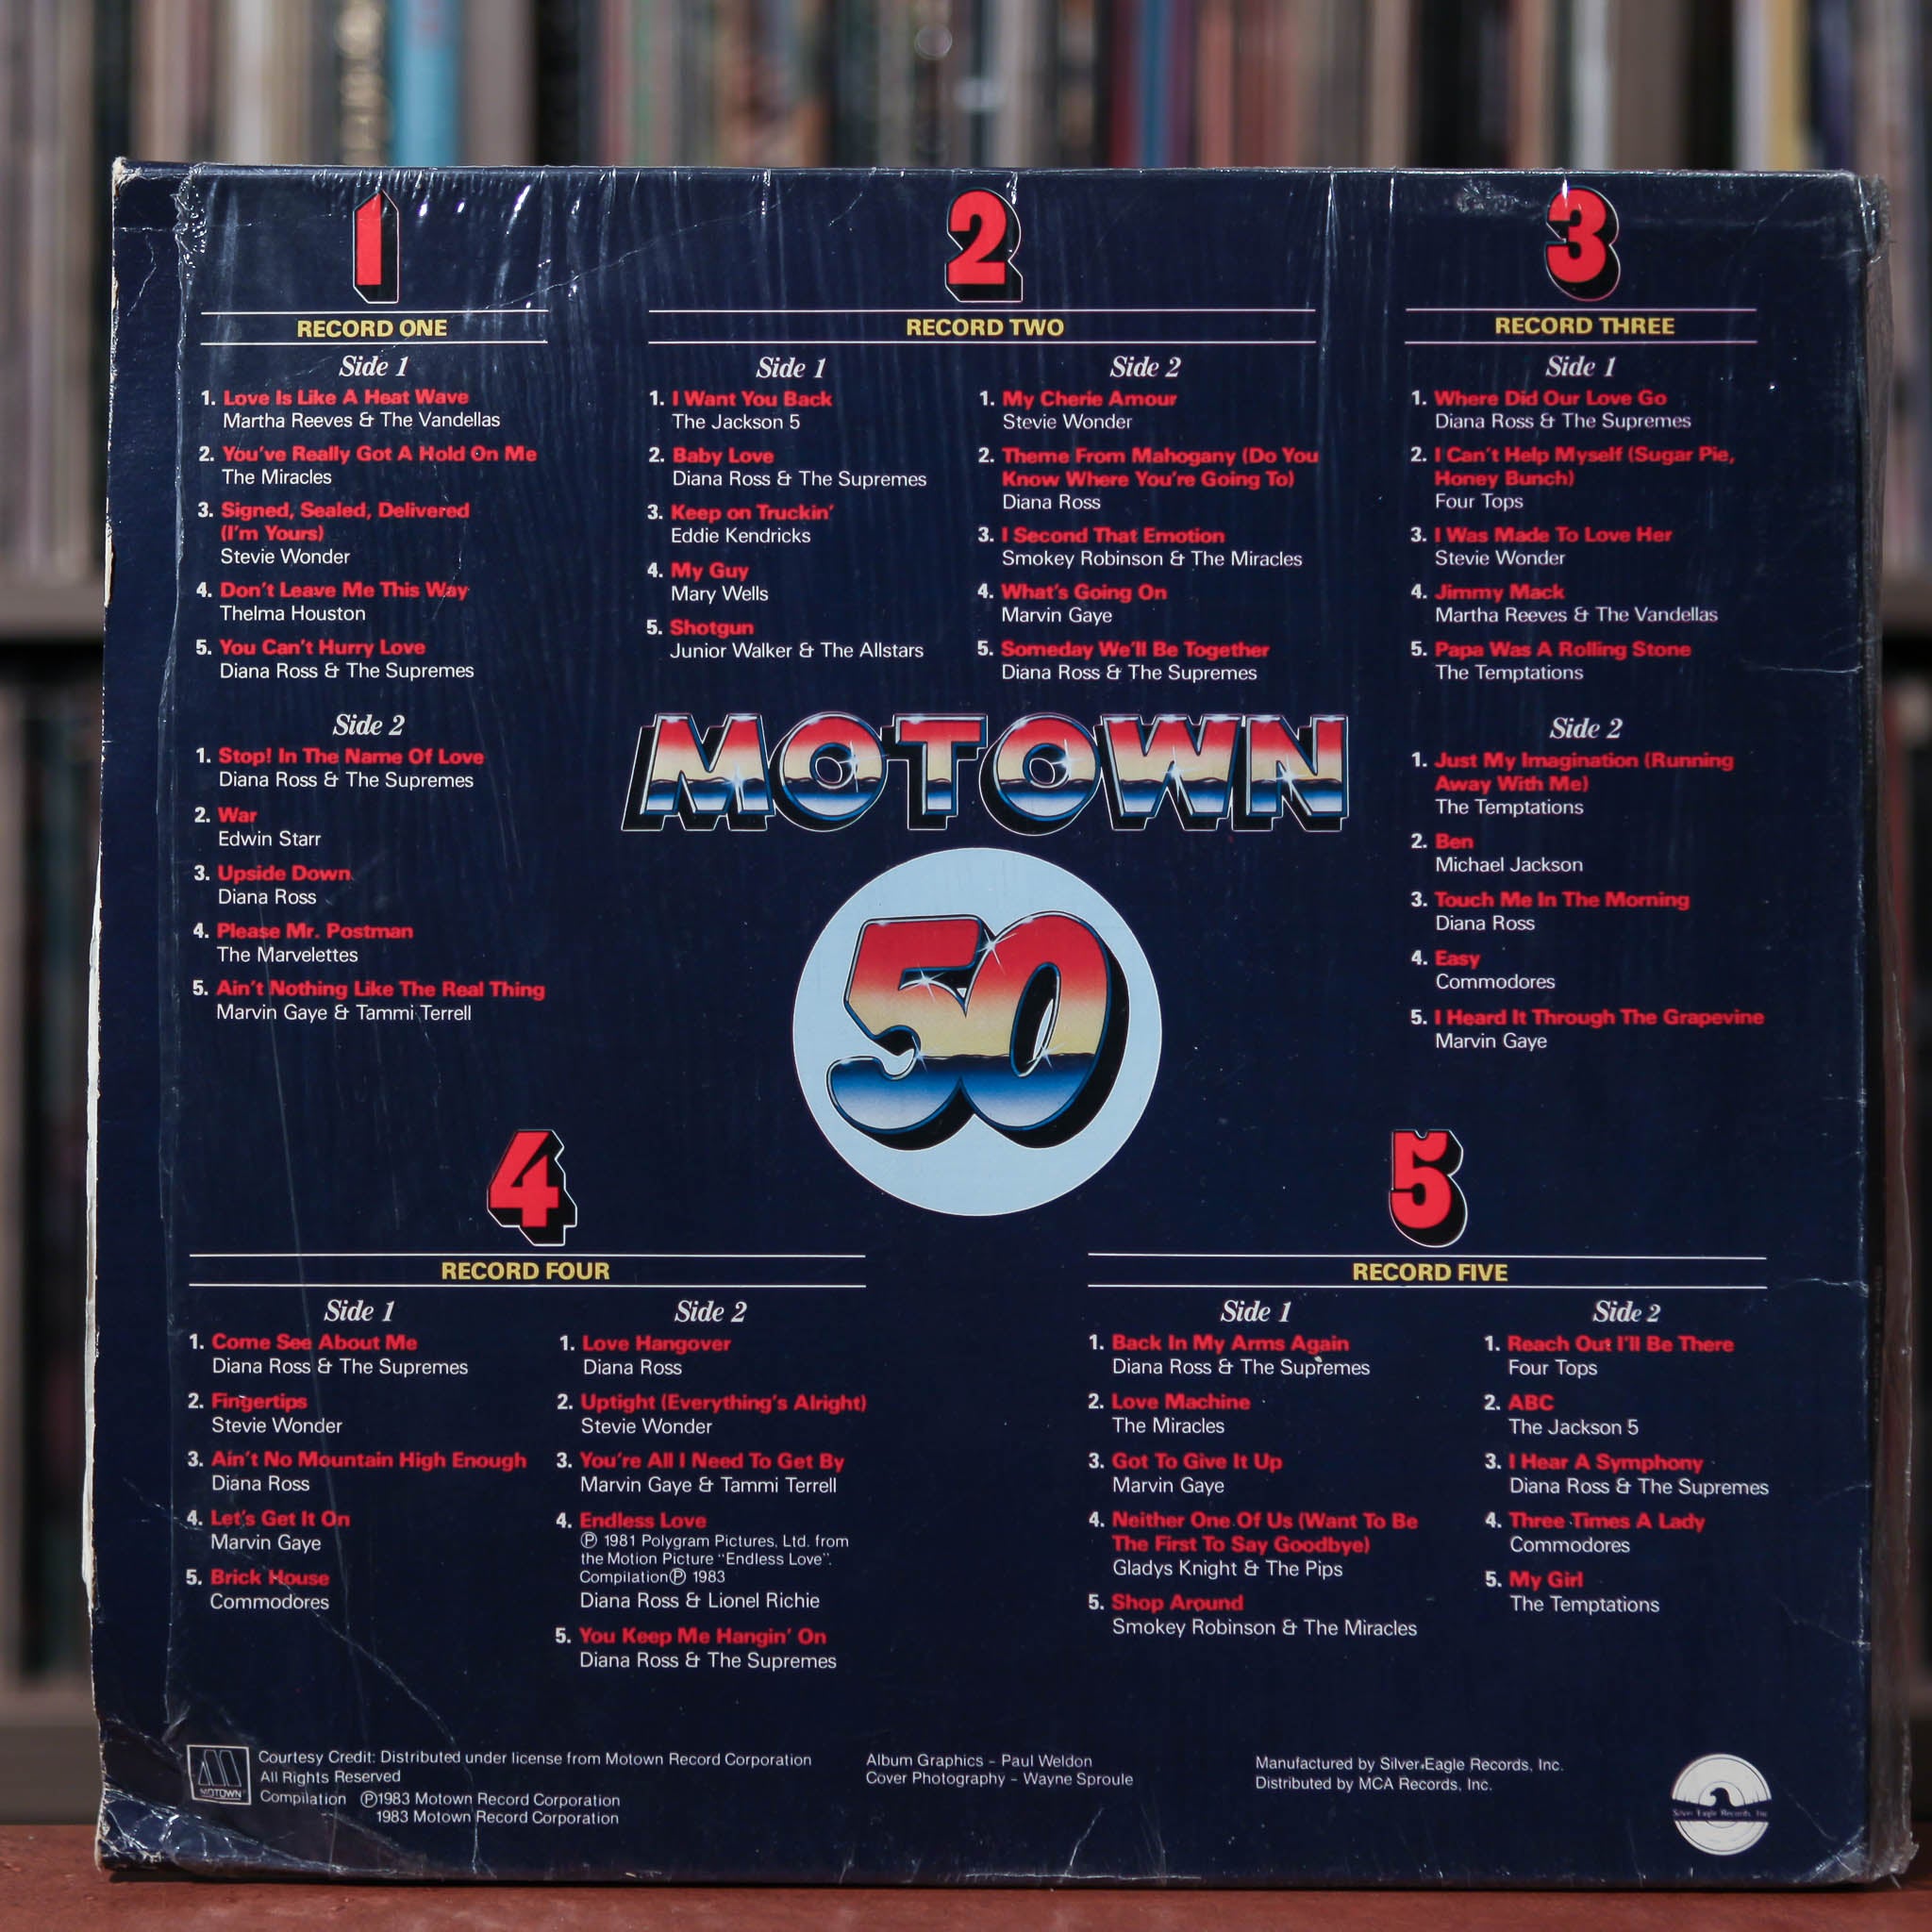 Marvin Gaye Motown Anniversary: Marvin Gaye LP (Blue Vinyl)